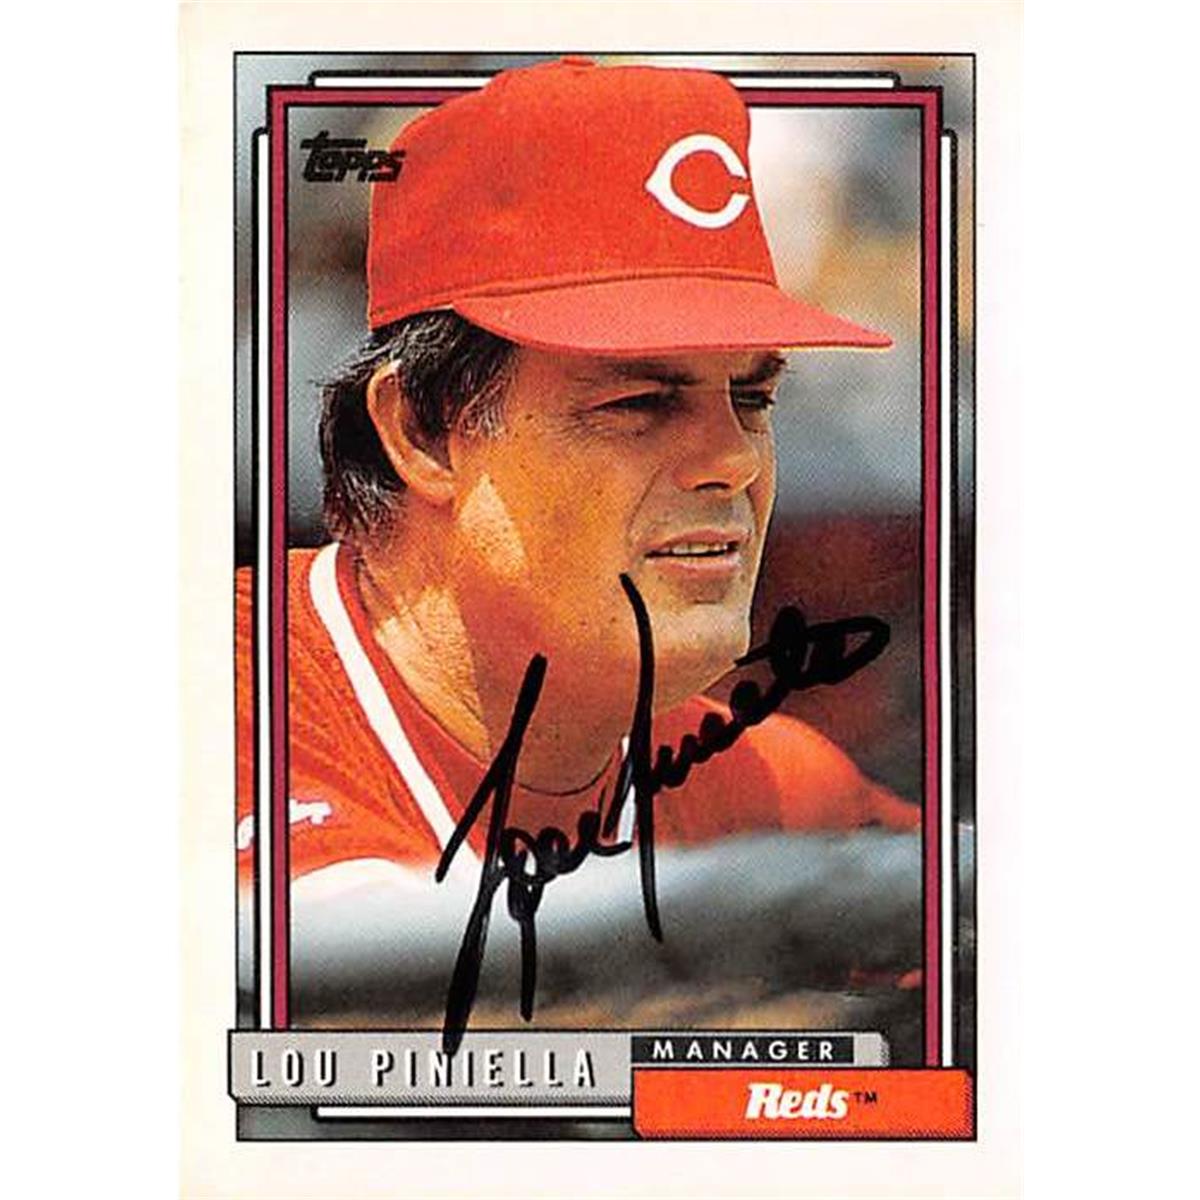 Autograph Warehouse 366470 Lou Piniella Autographed Baseball Card - 1992 Topps No. 321